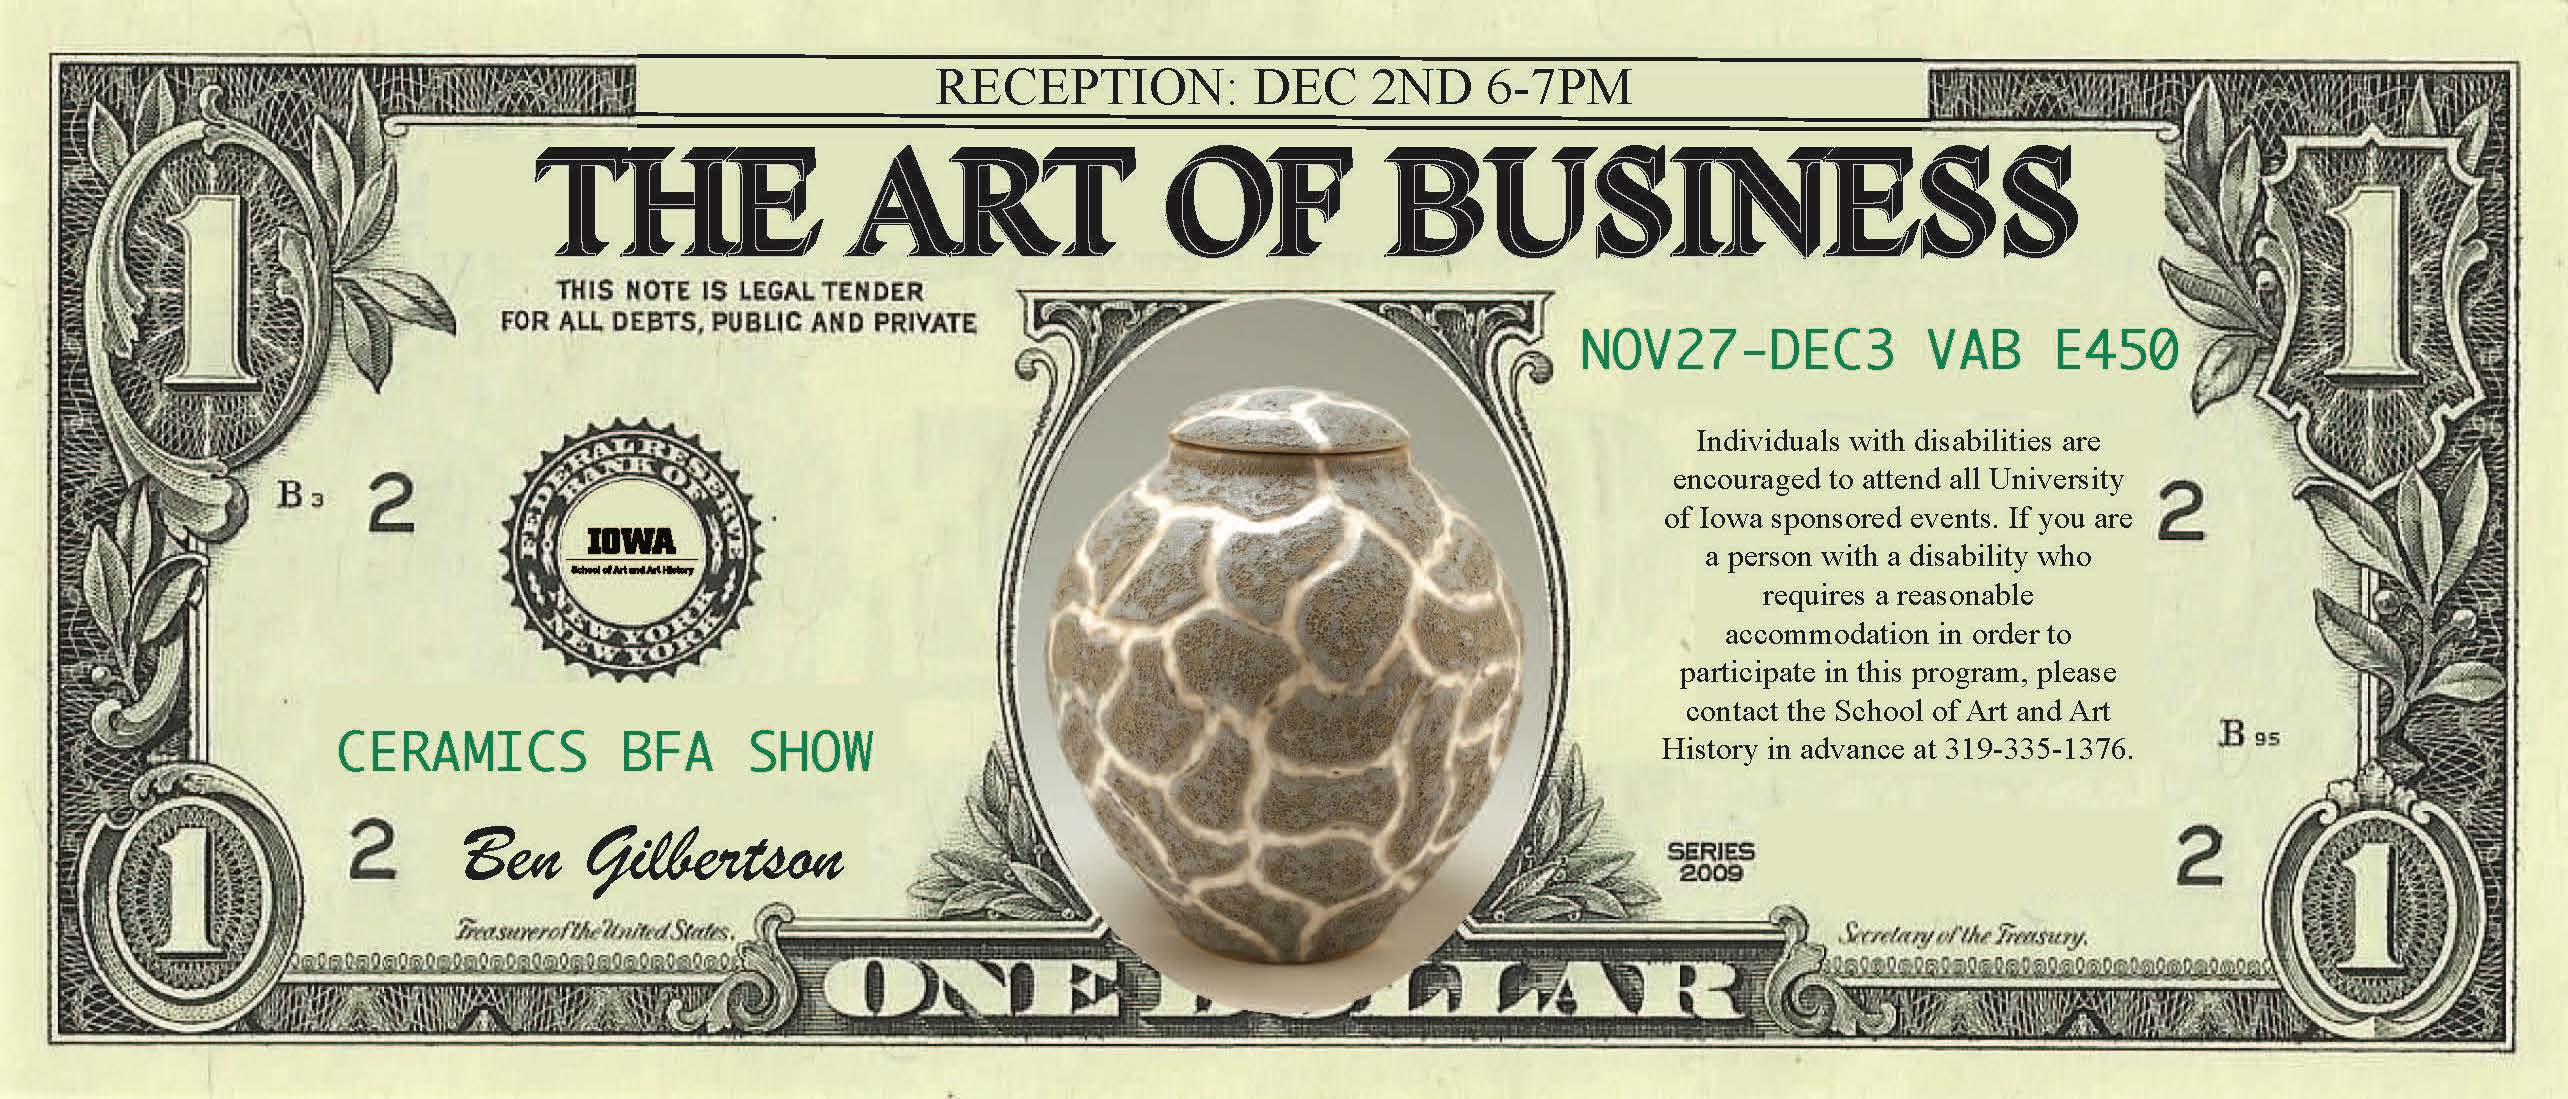 The Art of Business Ceramics BFA Show Ben Gilbertson November 28, 2022 - December 2, 2022 E450 Visual Arts Building 8:00am - 8:00pm Reception December 2nd 6:00-7:00PM